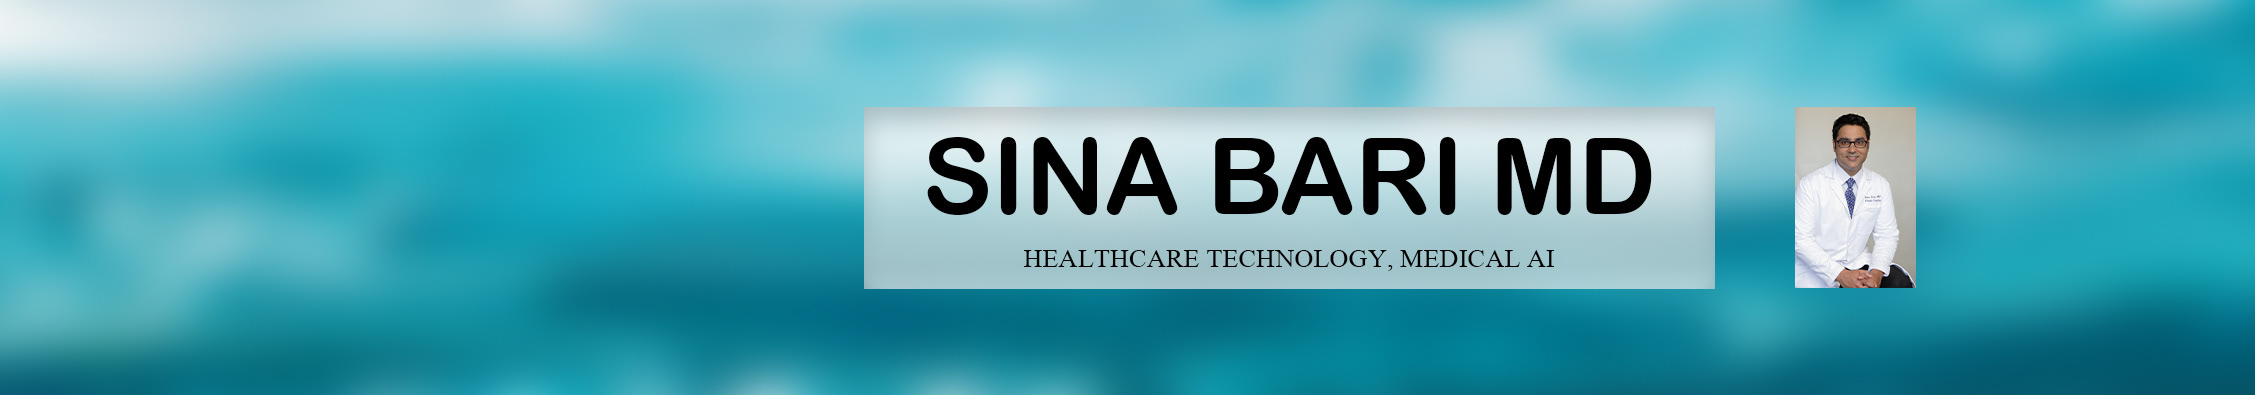 Sina Bari MD's profile banner